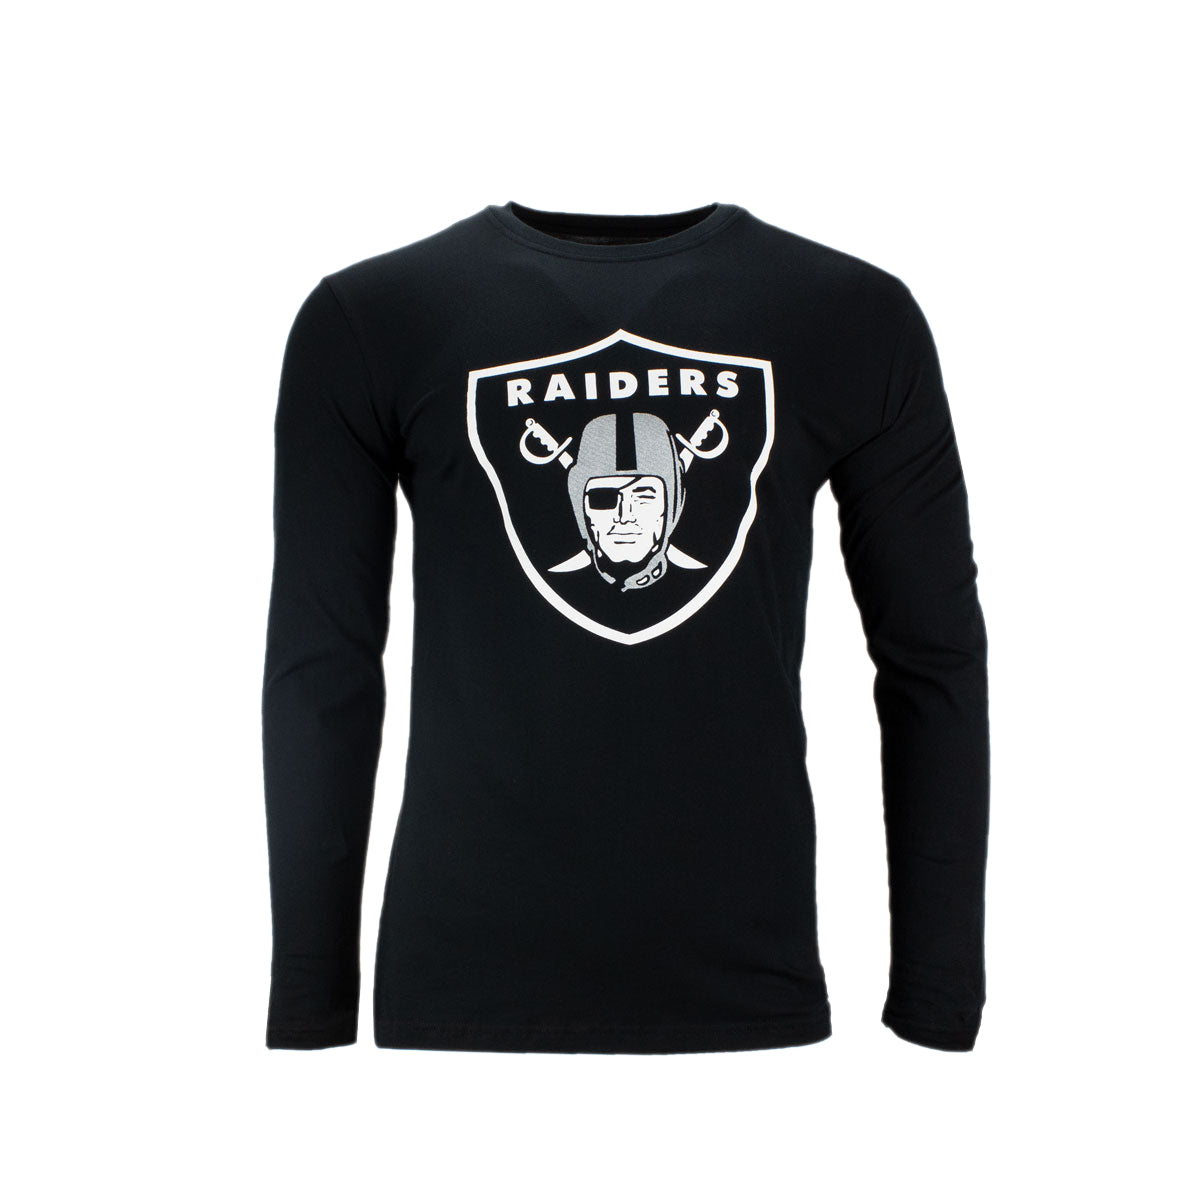 Fanatics NFL Las Vegas Oakland Raiders langarm Shirt Herren 1568MBLK1ADORA S